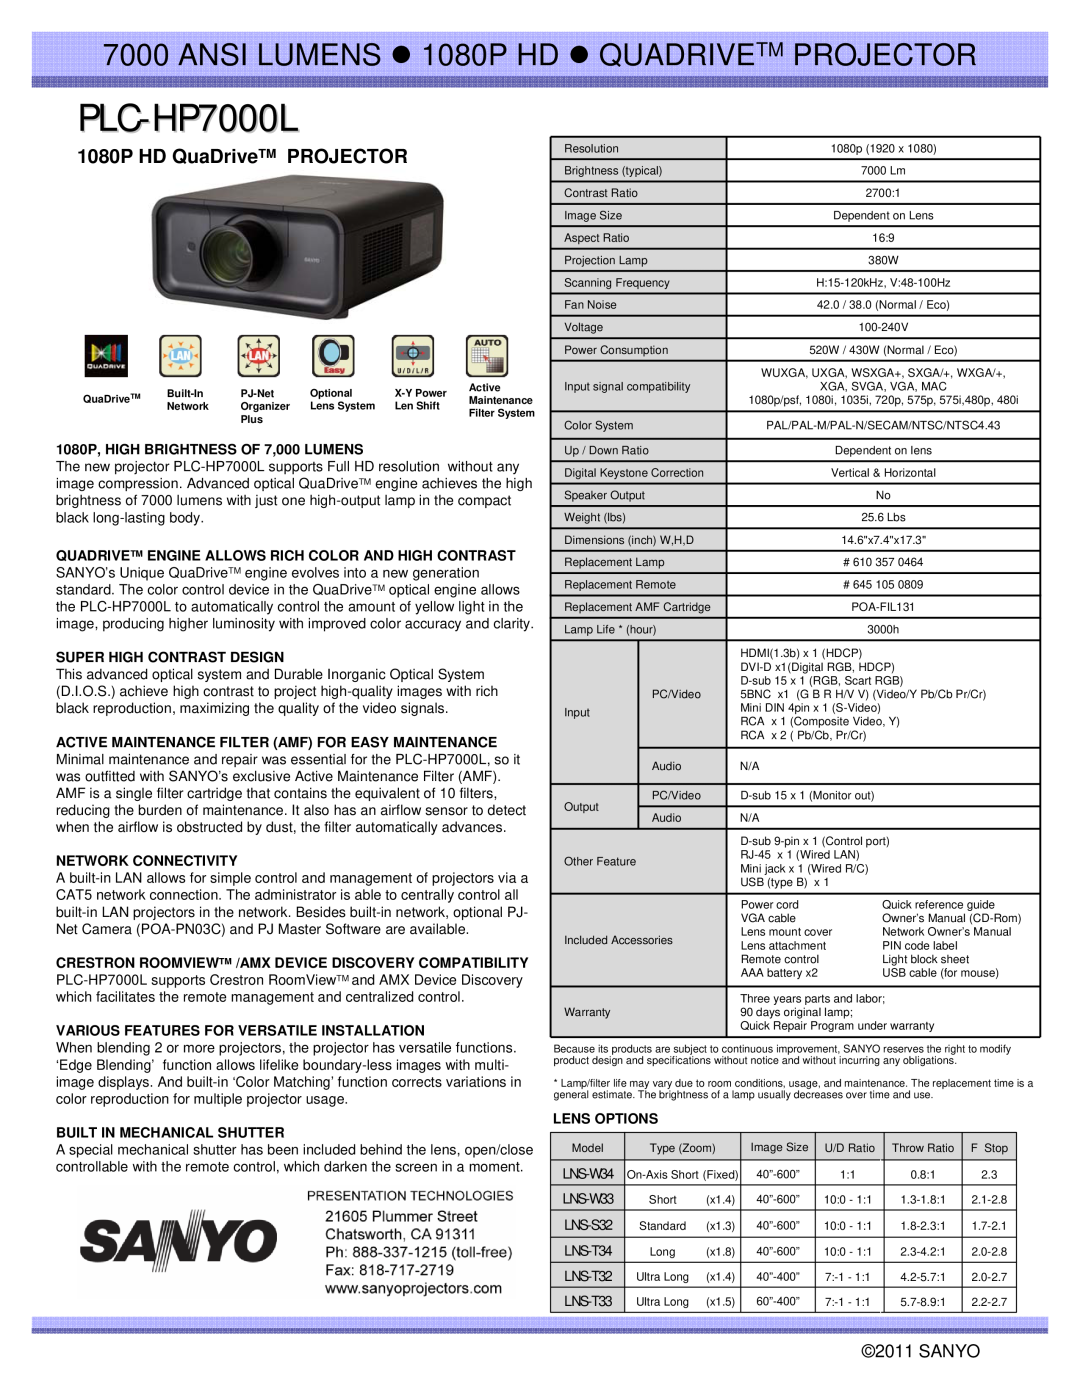 Sanyo dimensions PLC-HP7000L, 1080P HD QuaDriveTM PROJECTOR, Sanyo, 1080P, HIGH BRIGHTNESS OF 7,000 LUMENS 